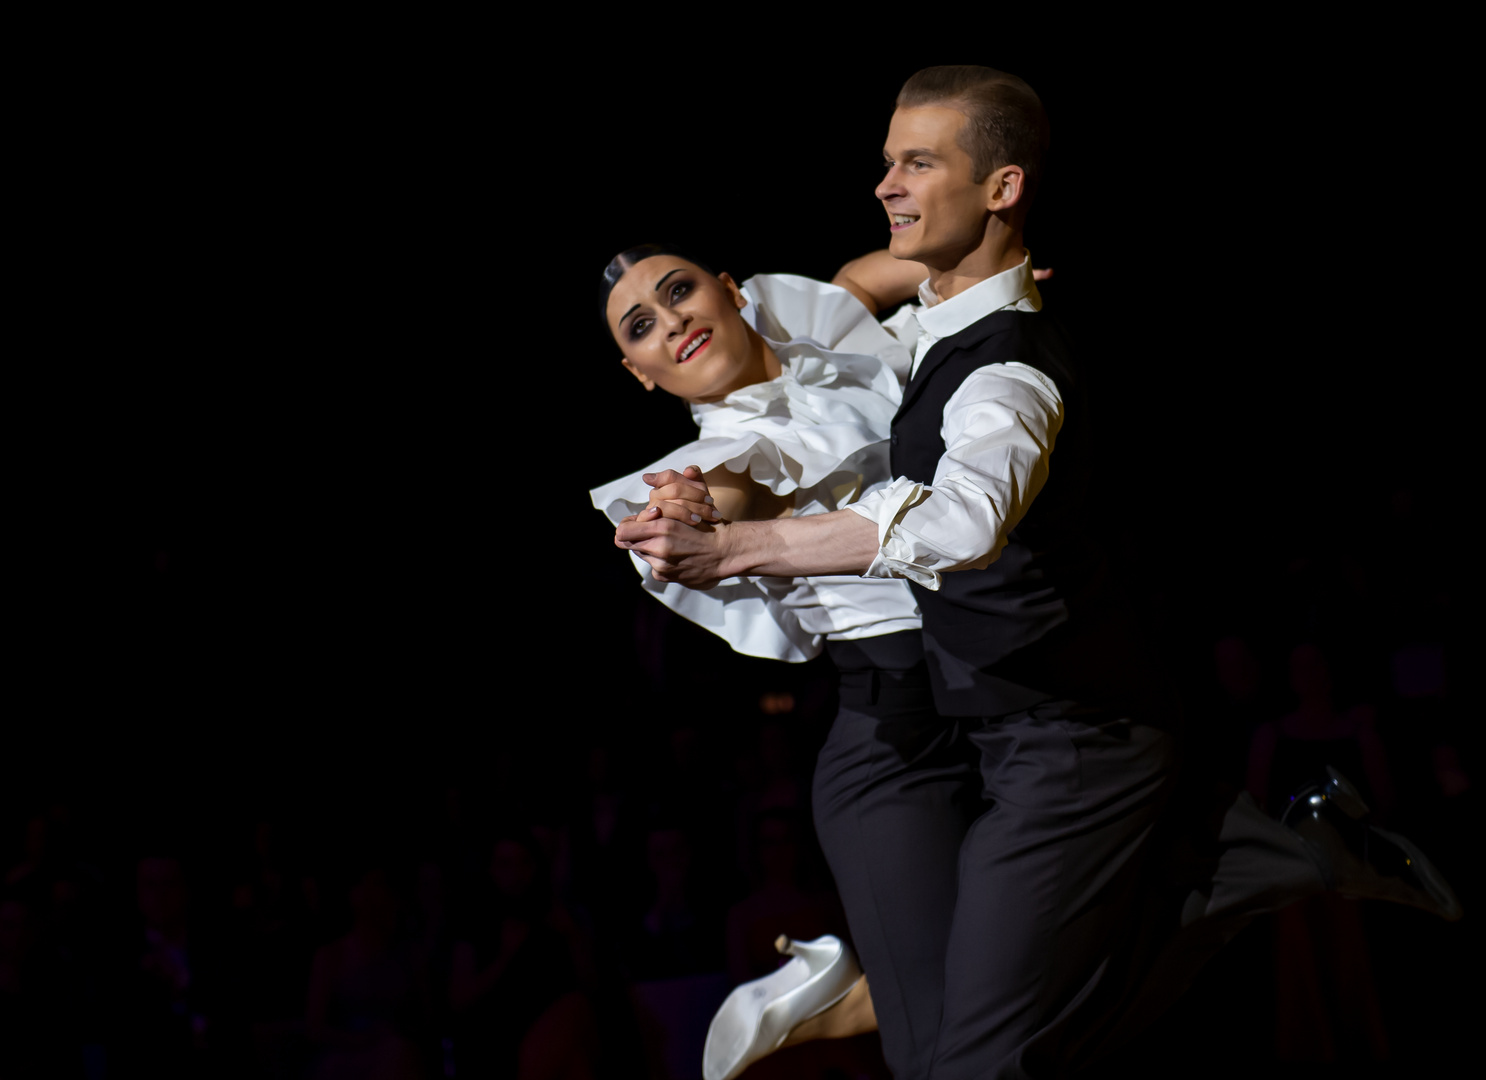 Anna Zudilina&Fedor Isaev beim Standardtanz (Quickstep)